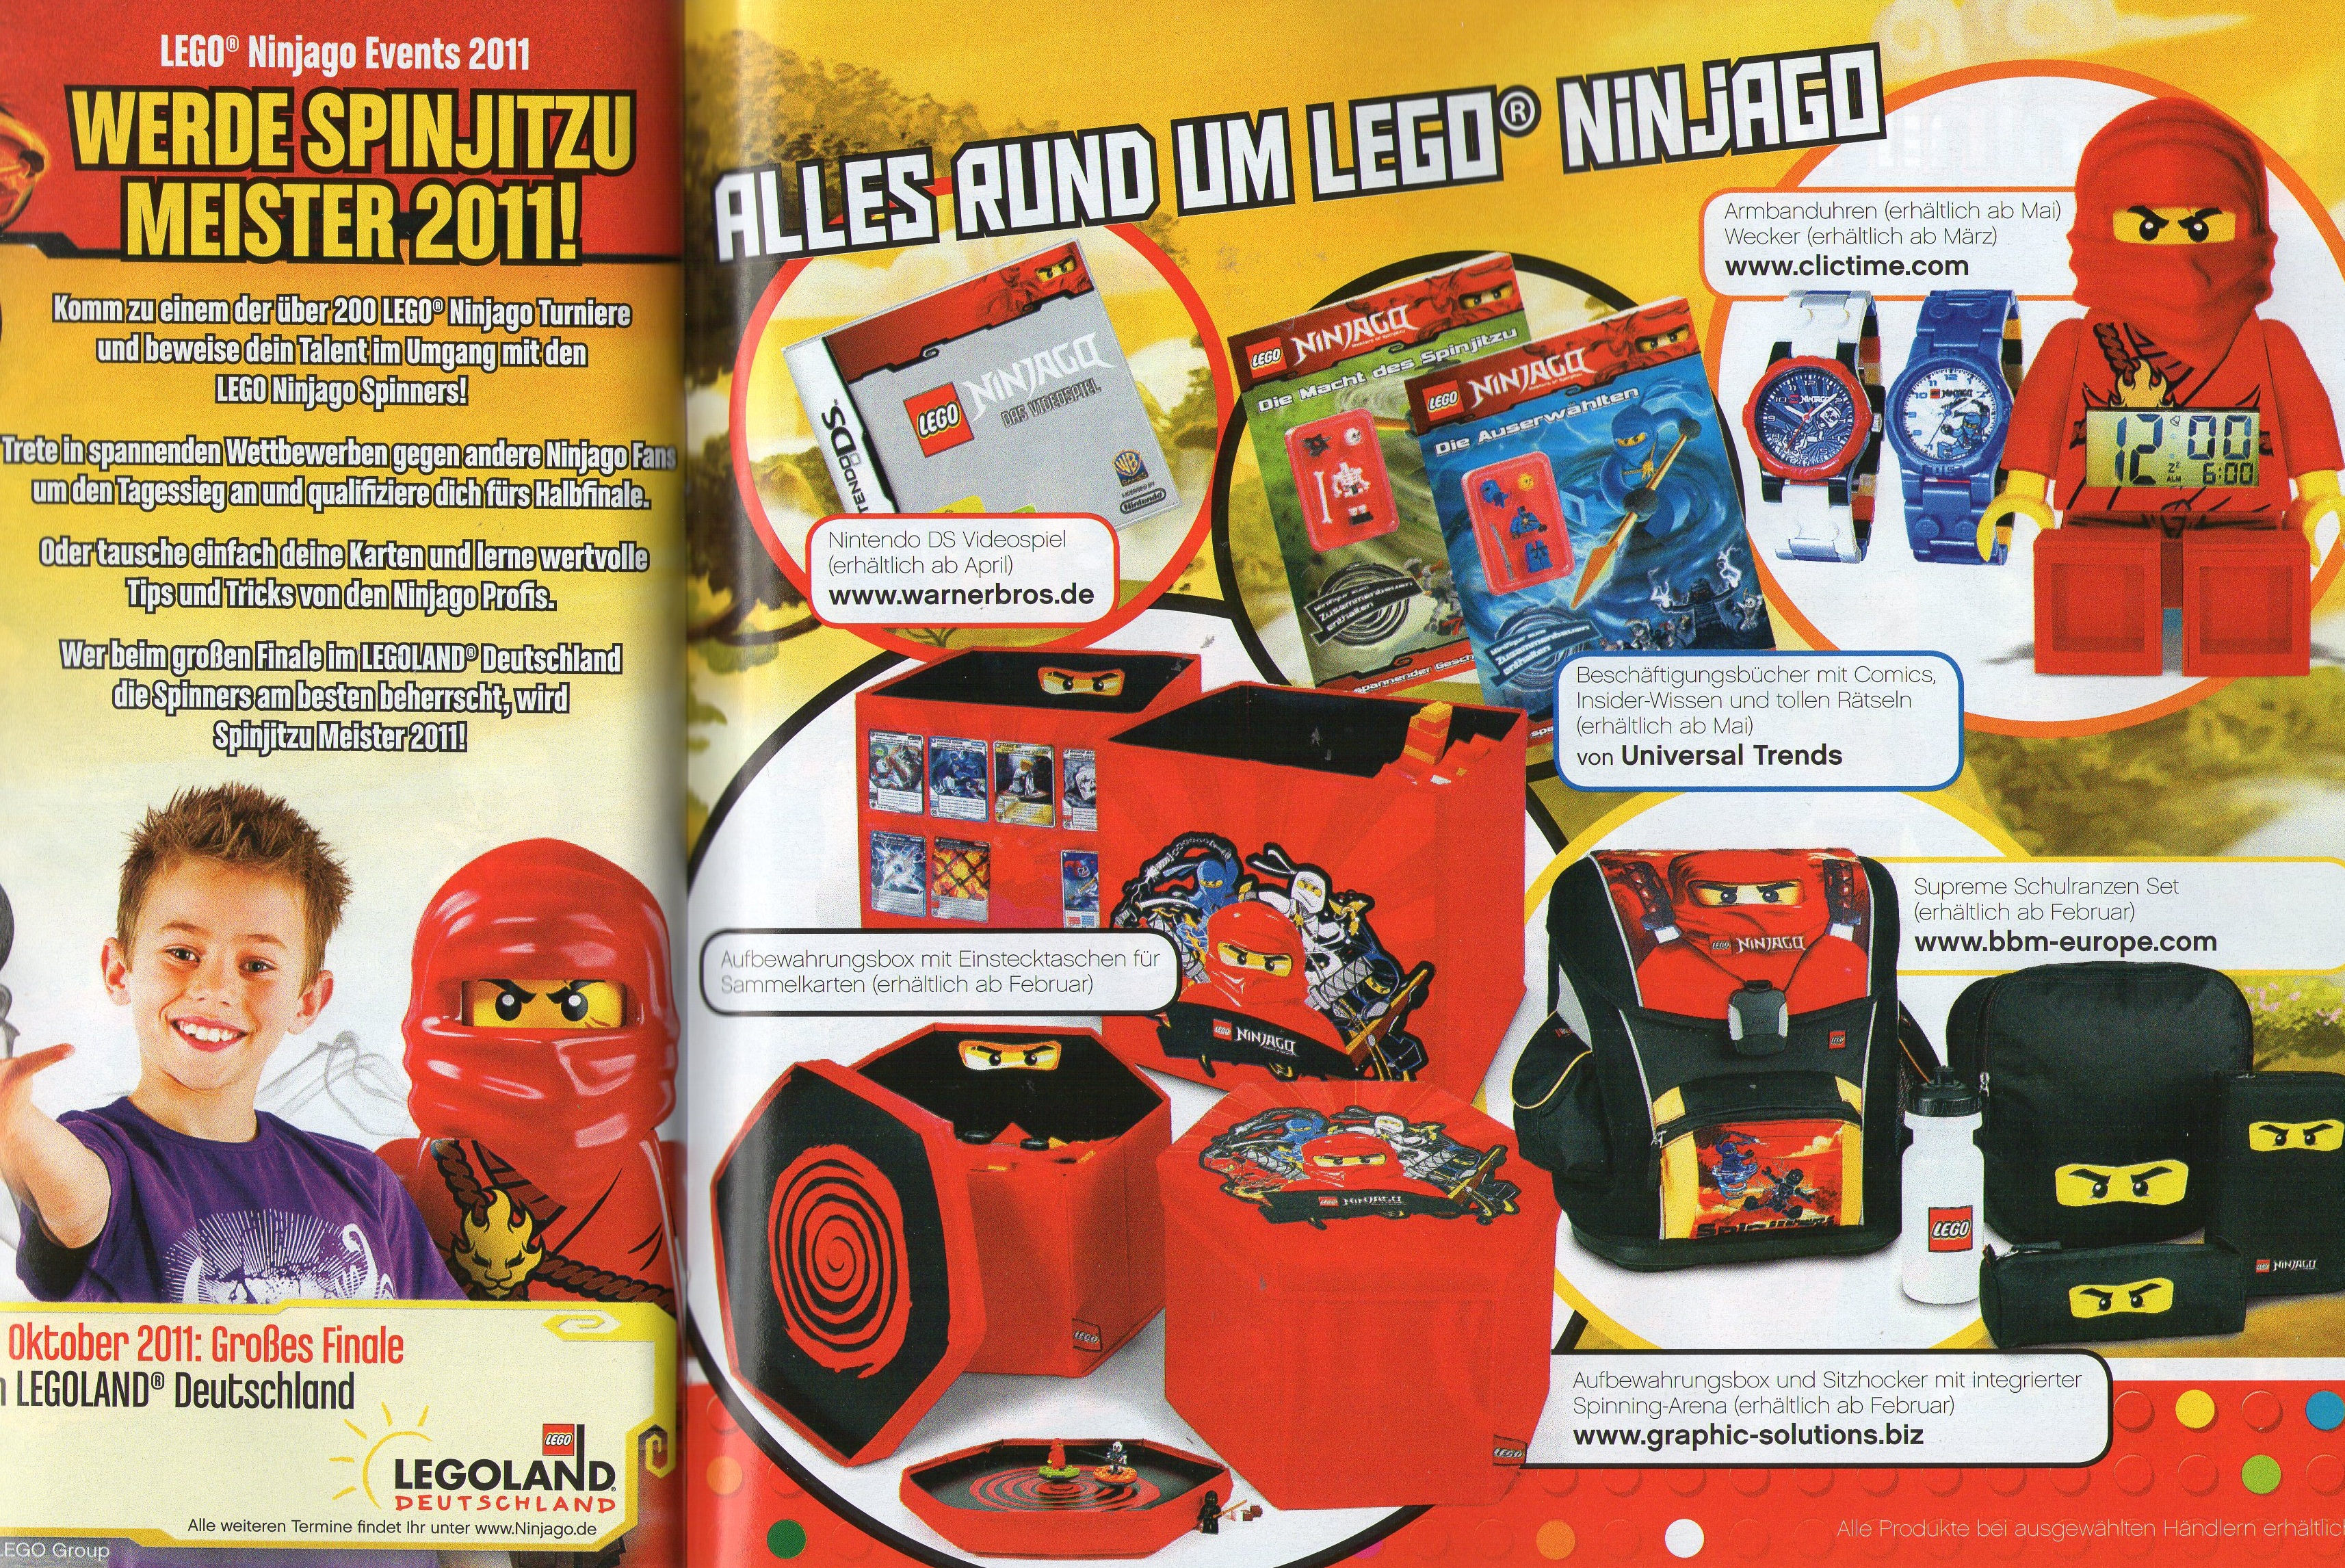 Lego Ninjago Cards